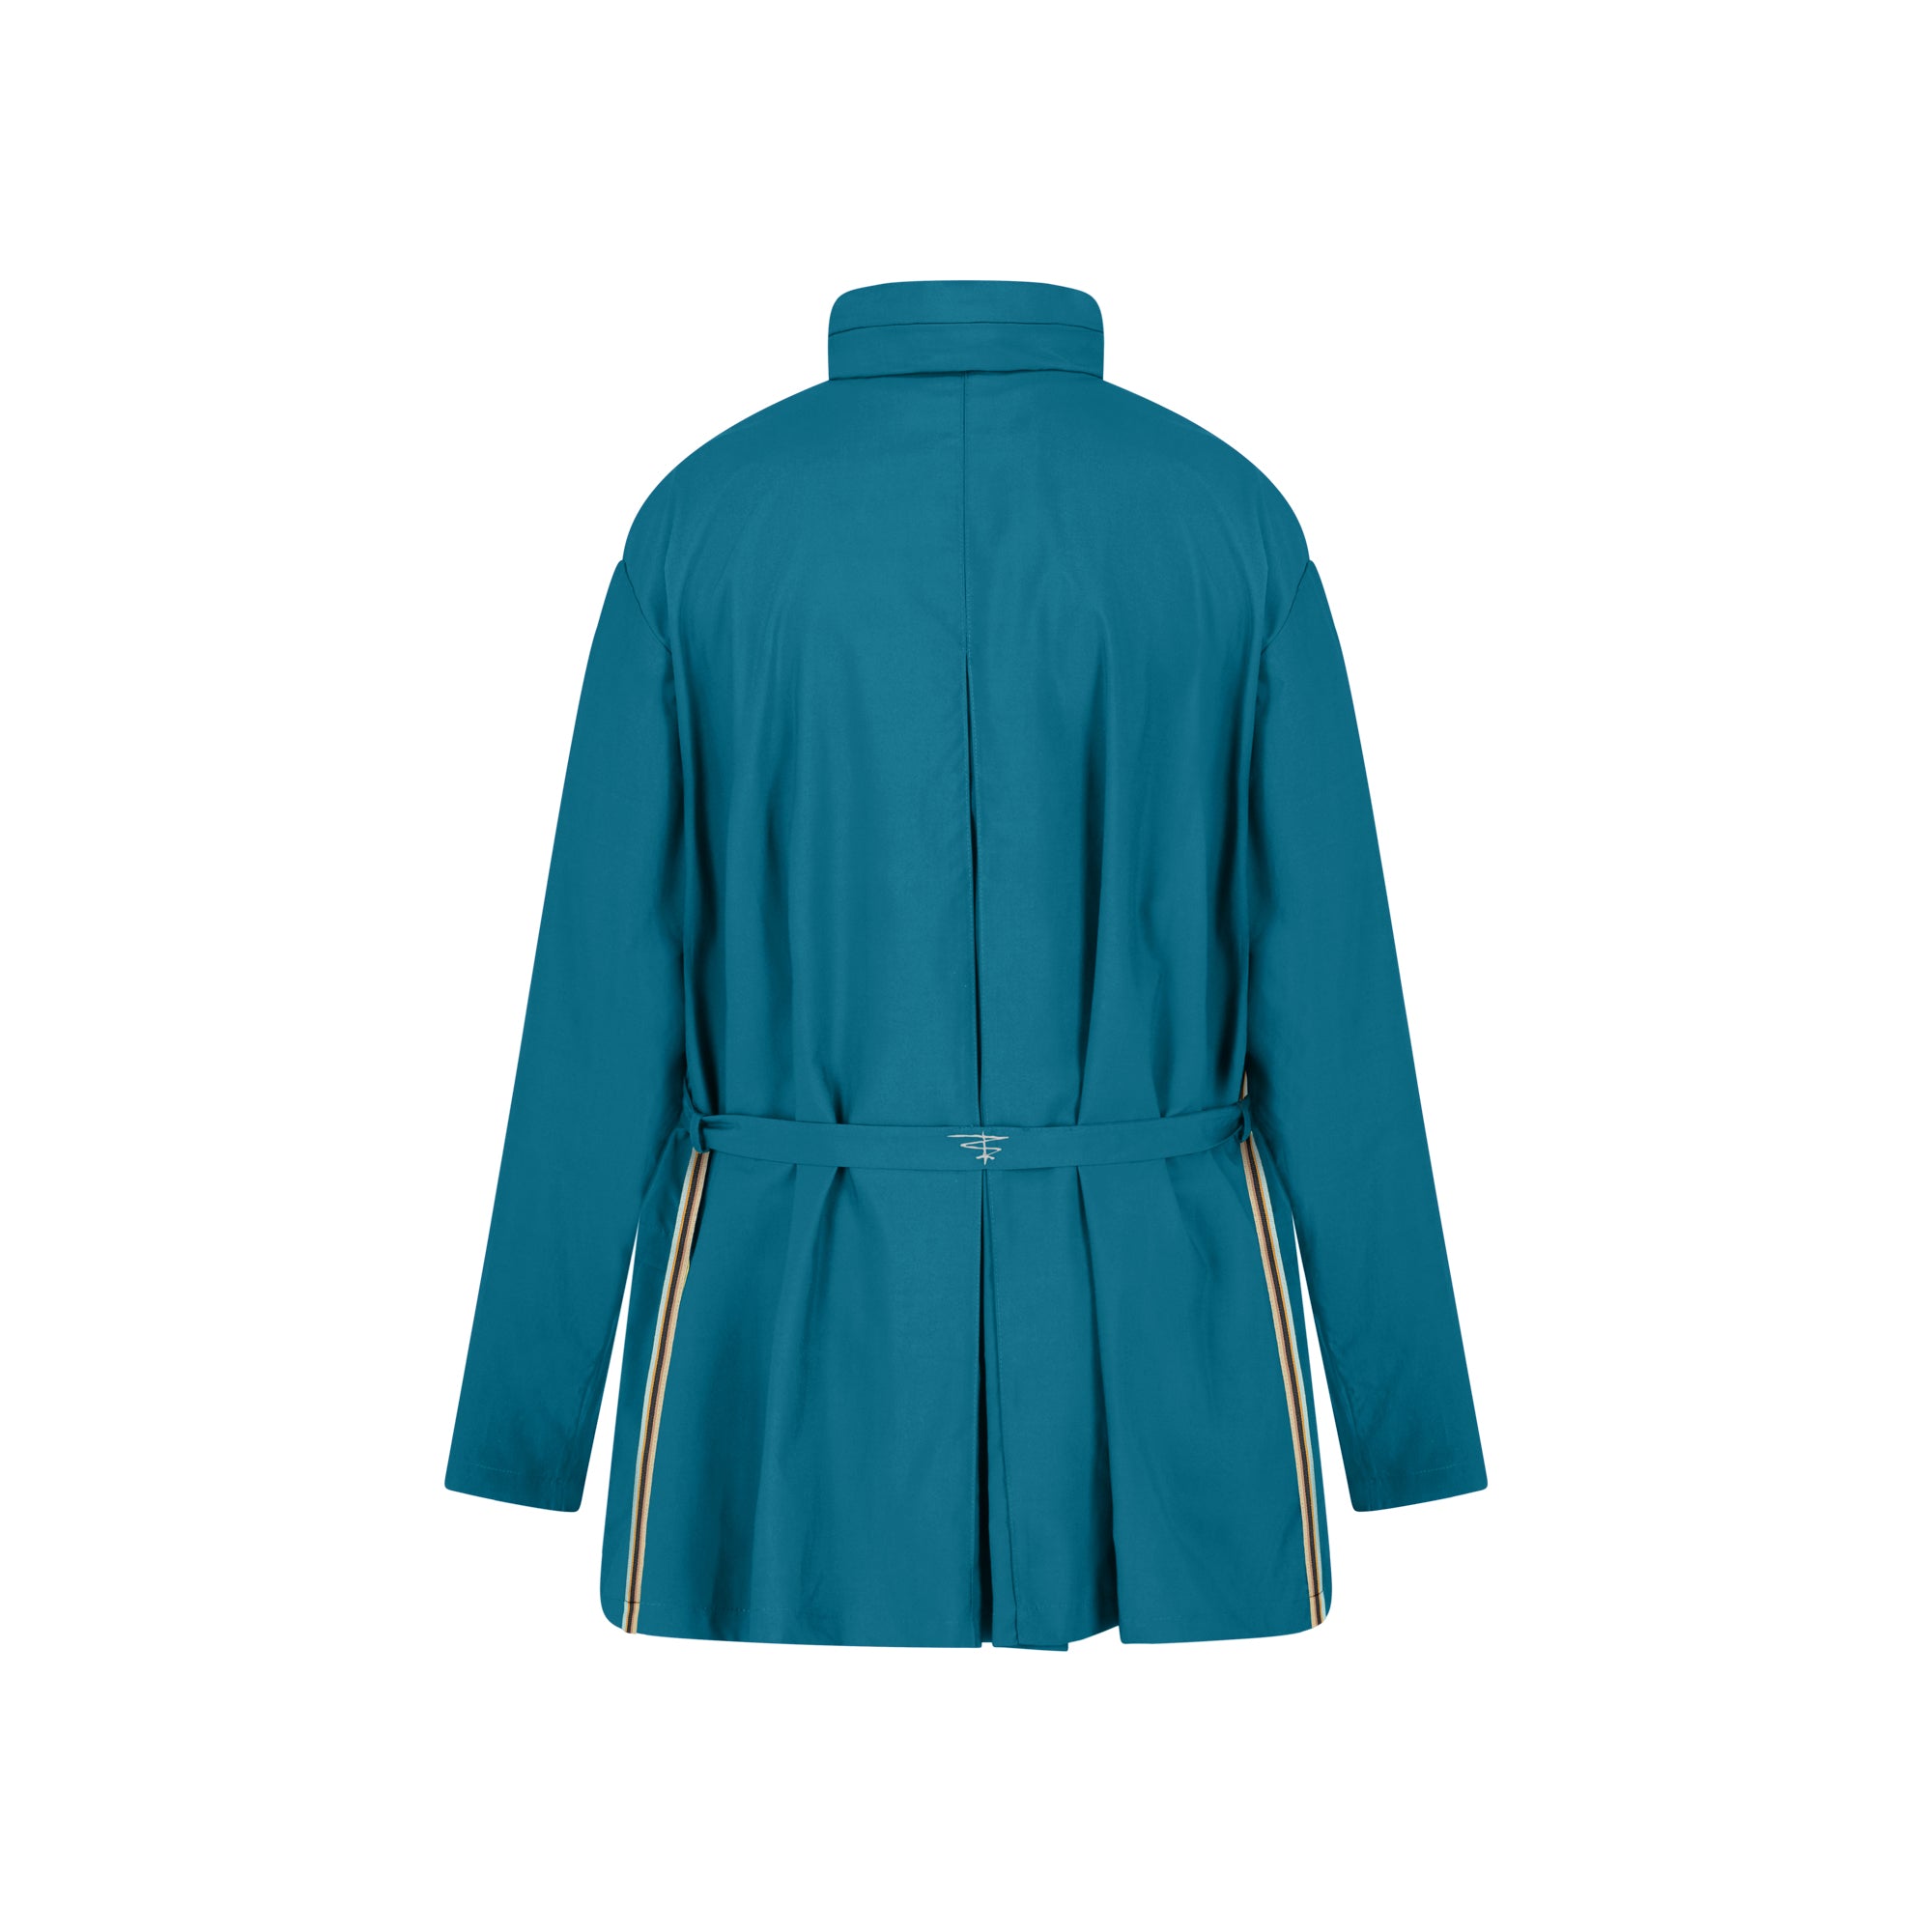 Bise raincoat - Ocean Blue color - back view